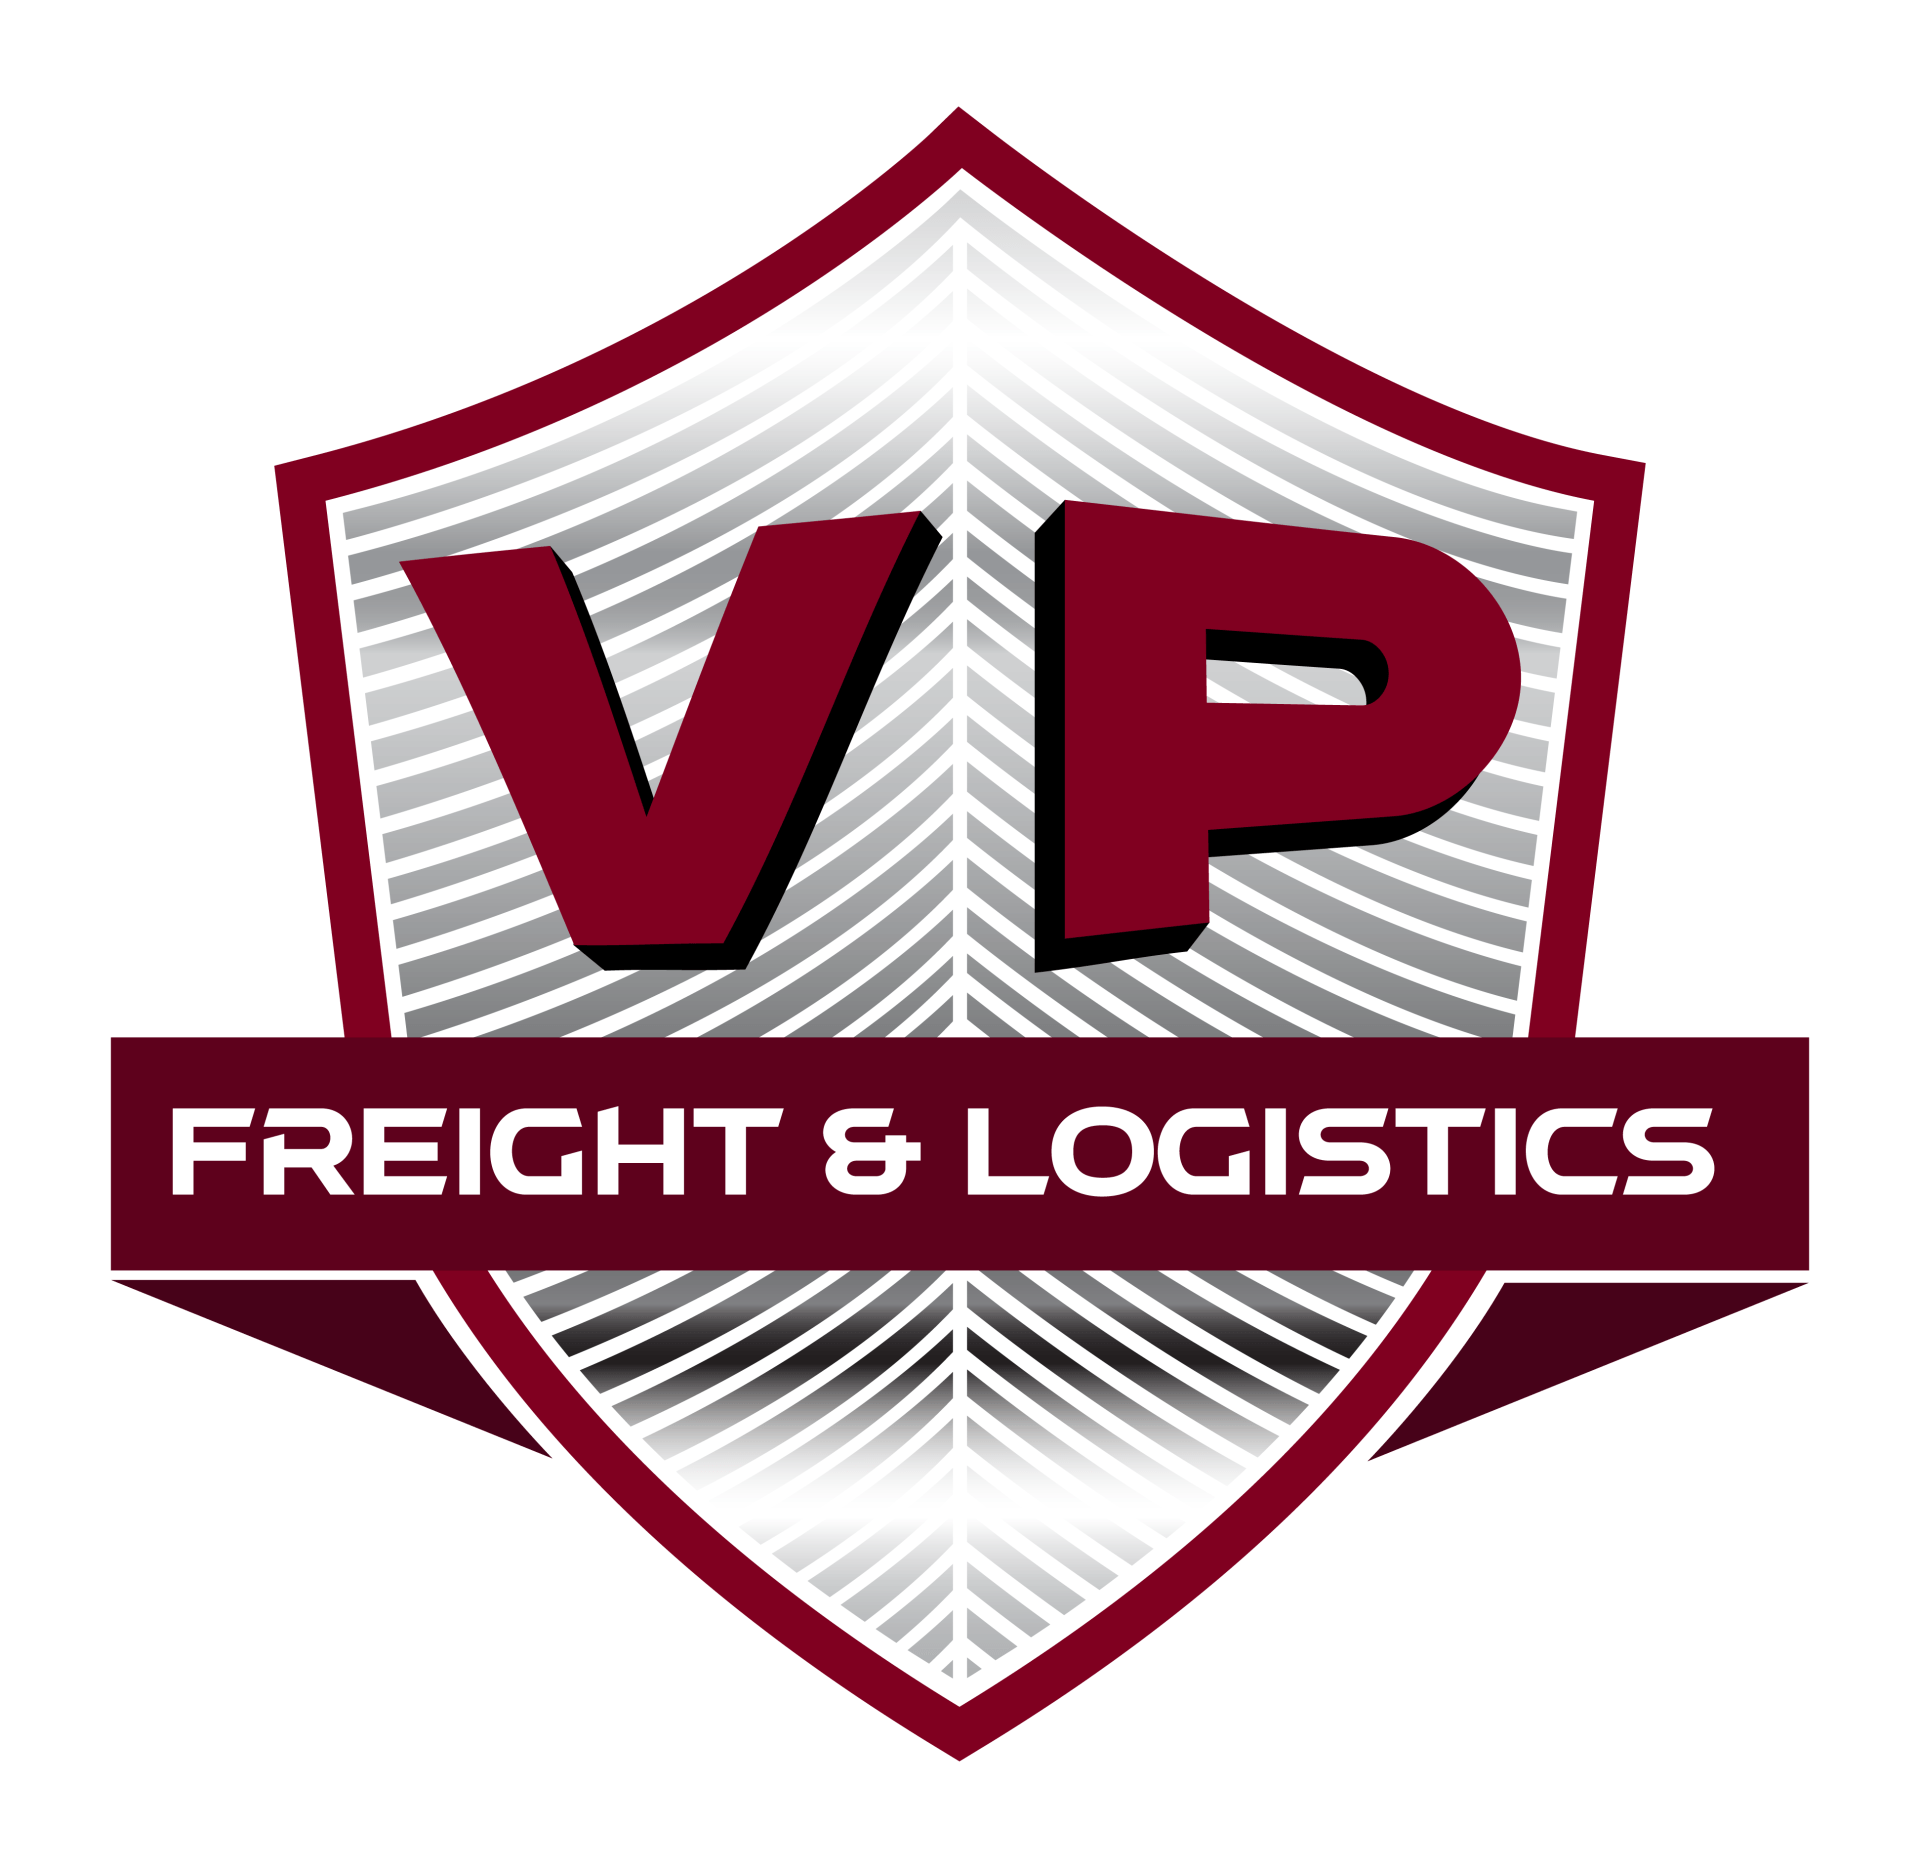 VP Freight & Logistics